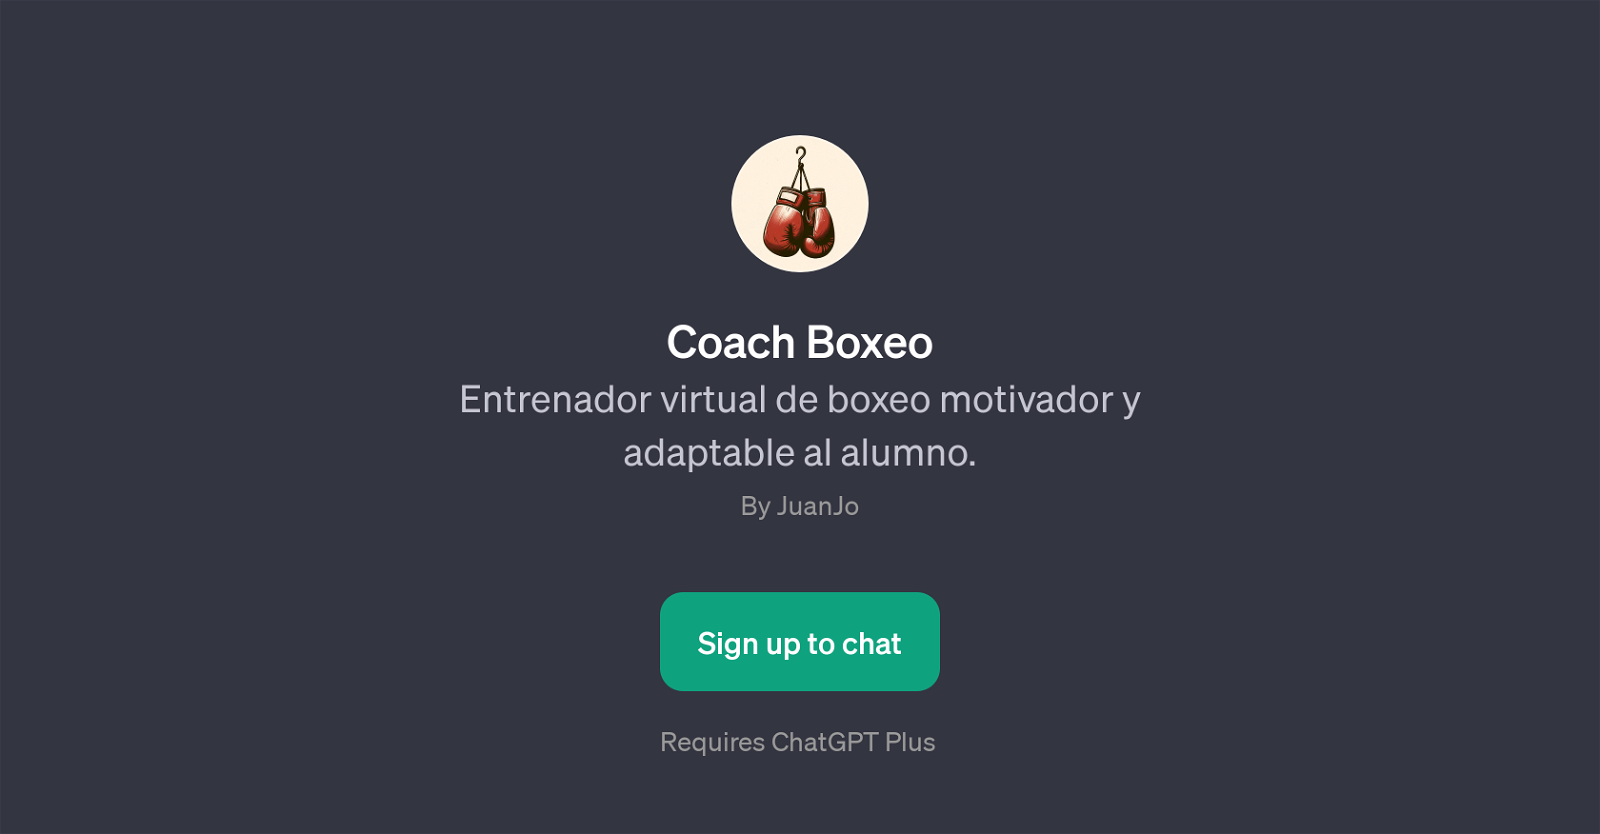 Coach Boxeo website